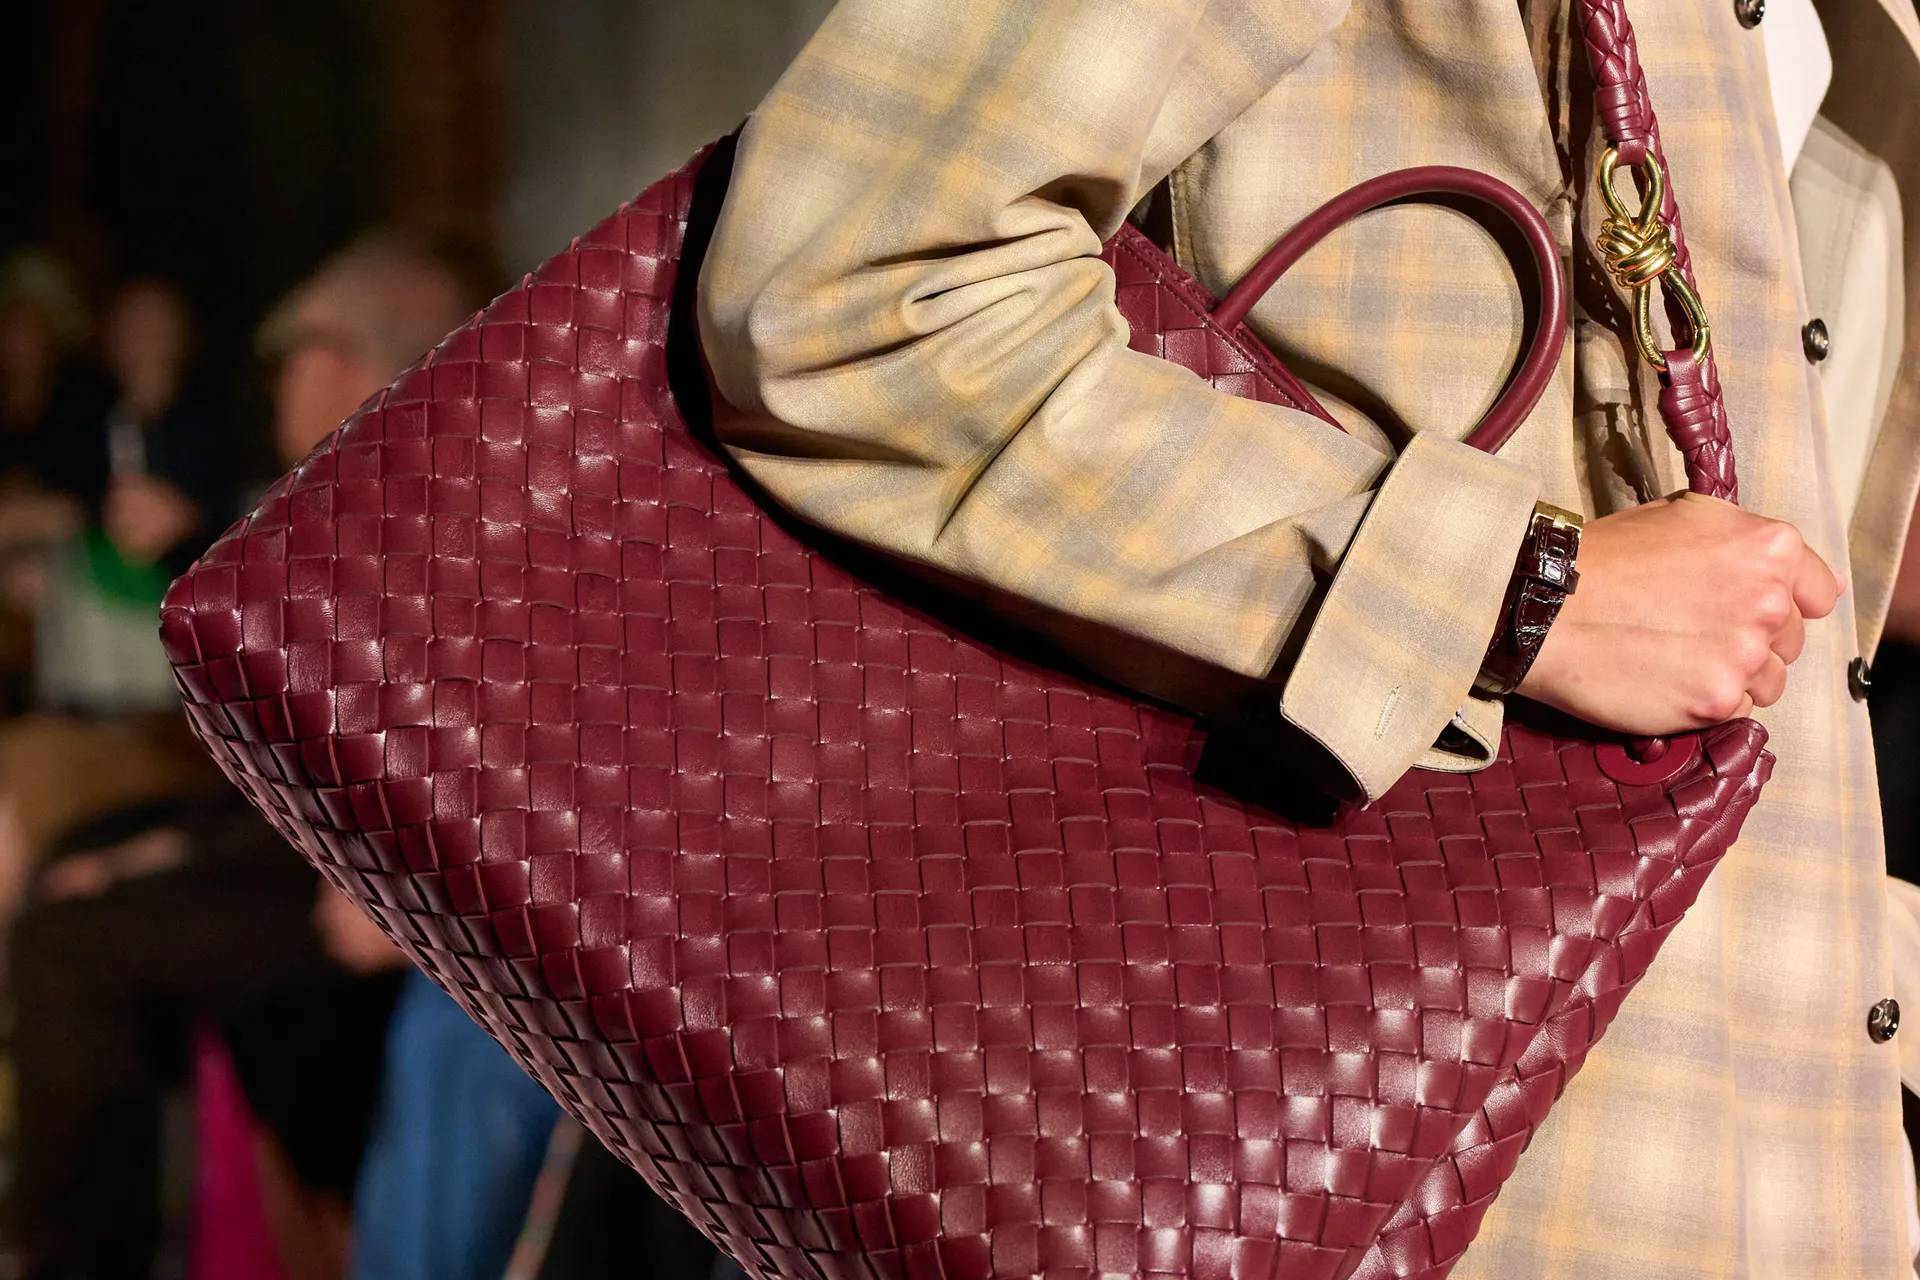 Sydney Sweeney's Bottega Veneta Bag Is The Purse Everyone's Loving